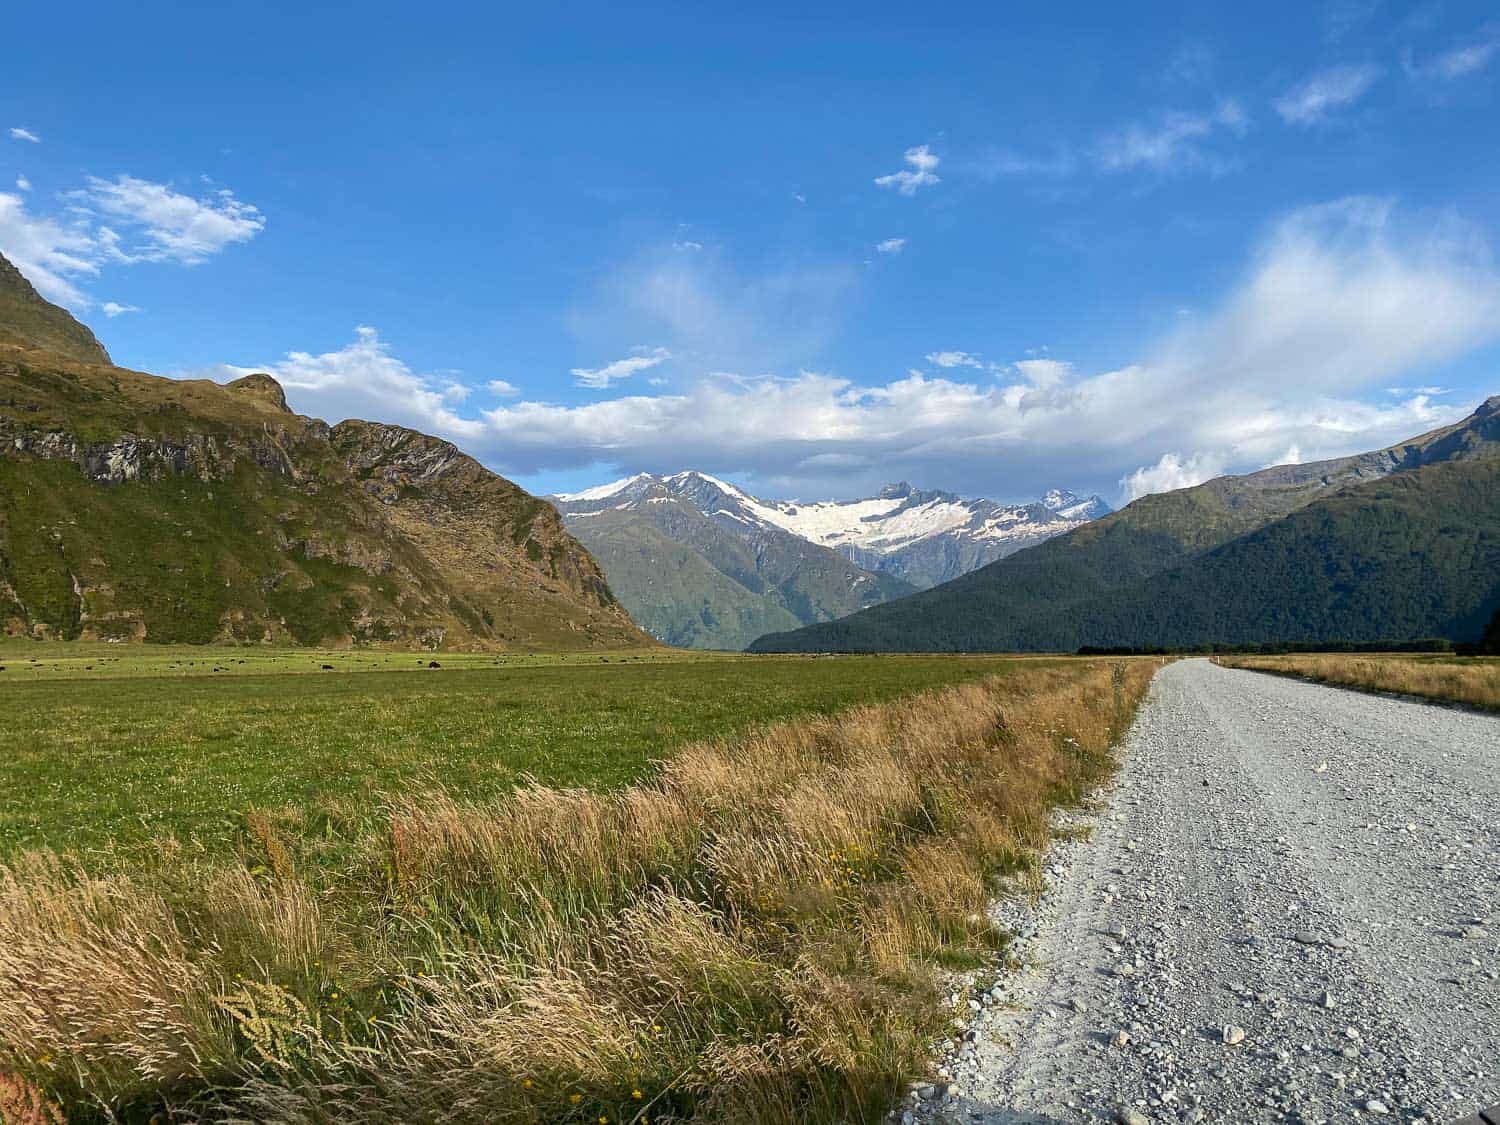 The gravel road on the way to Mount Aspiring National Park, Wanaka, New Zealand